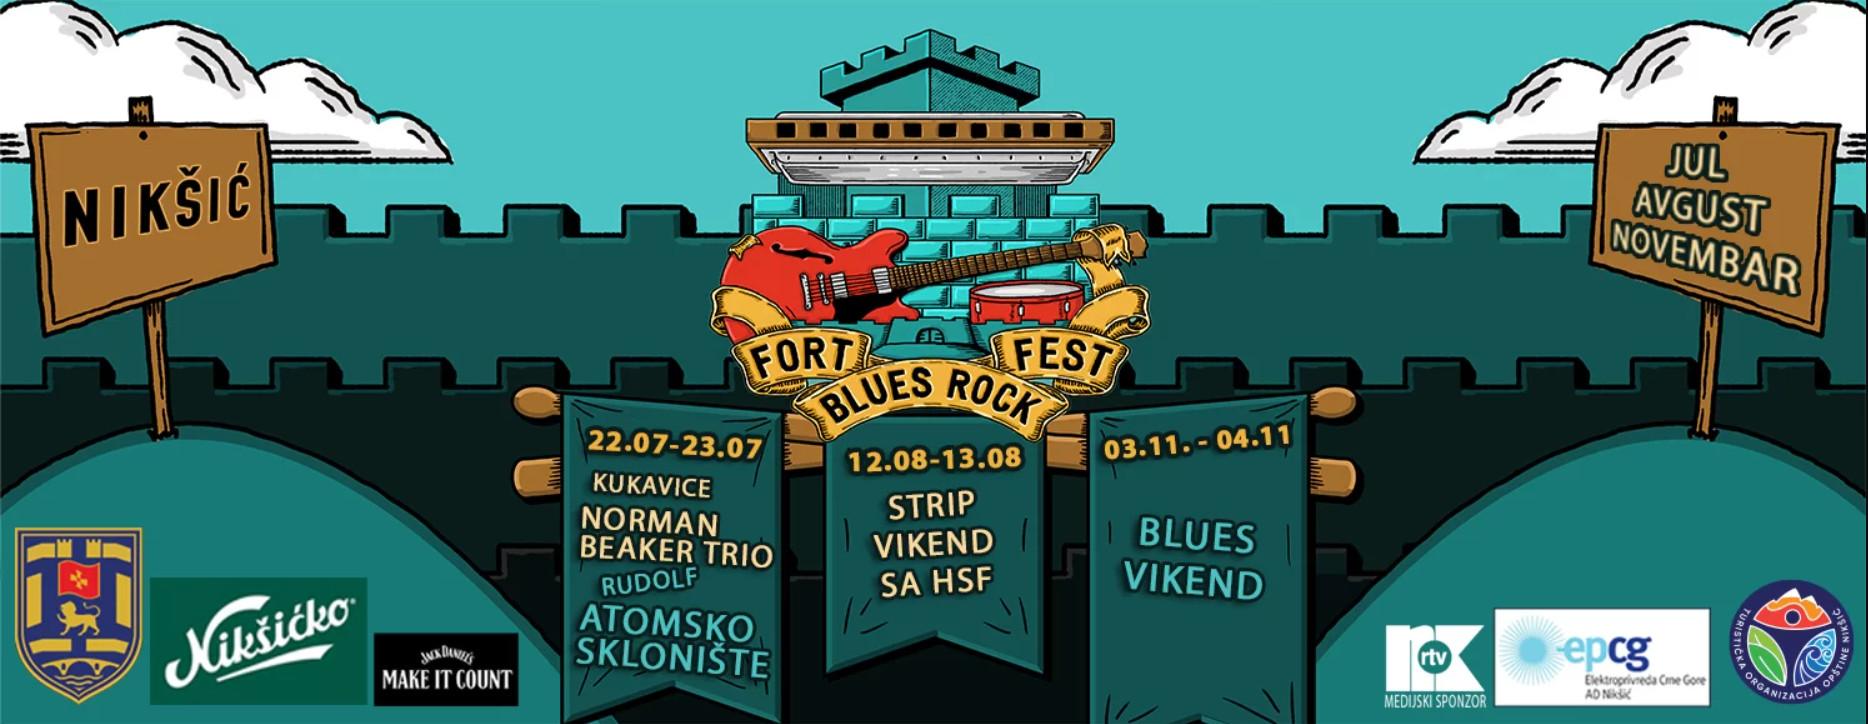 Fort Blues Rock Fest: Norman Beaker trio i Atomsko sklonište 22. i 23. jula u Nikšiću